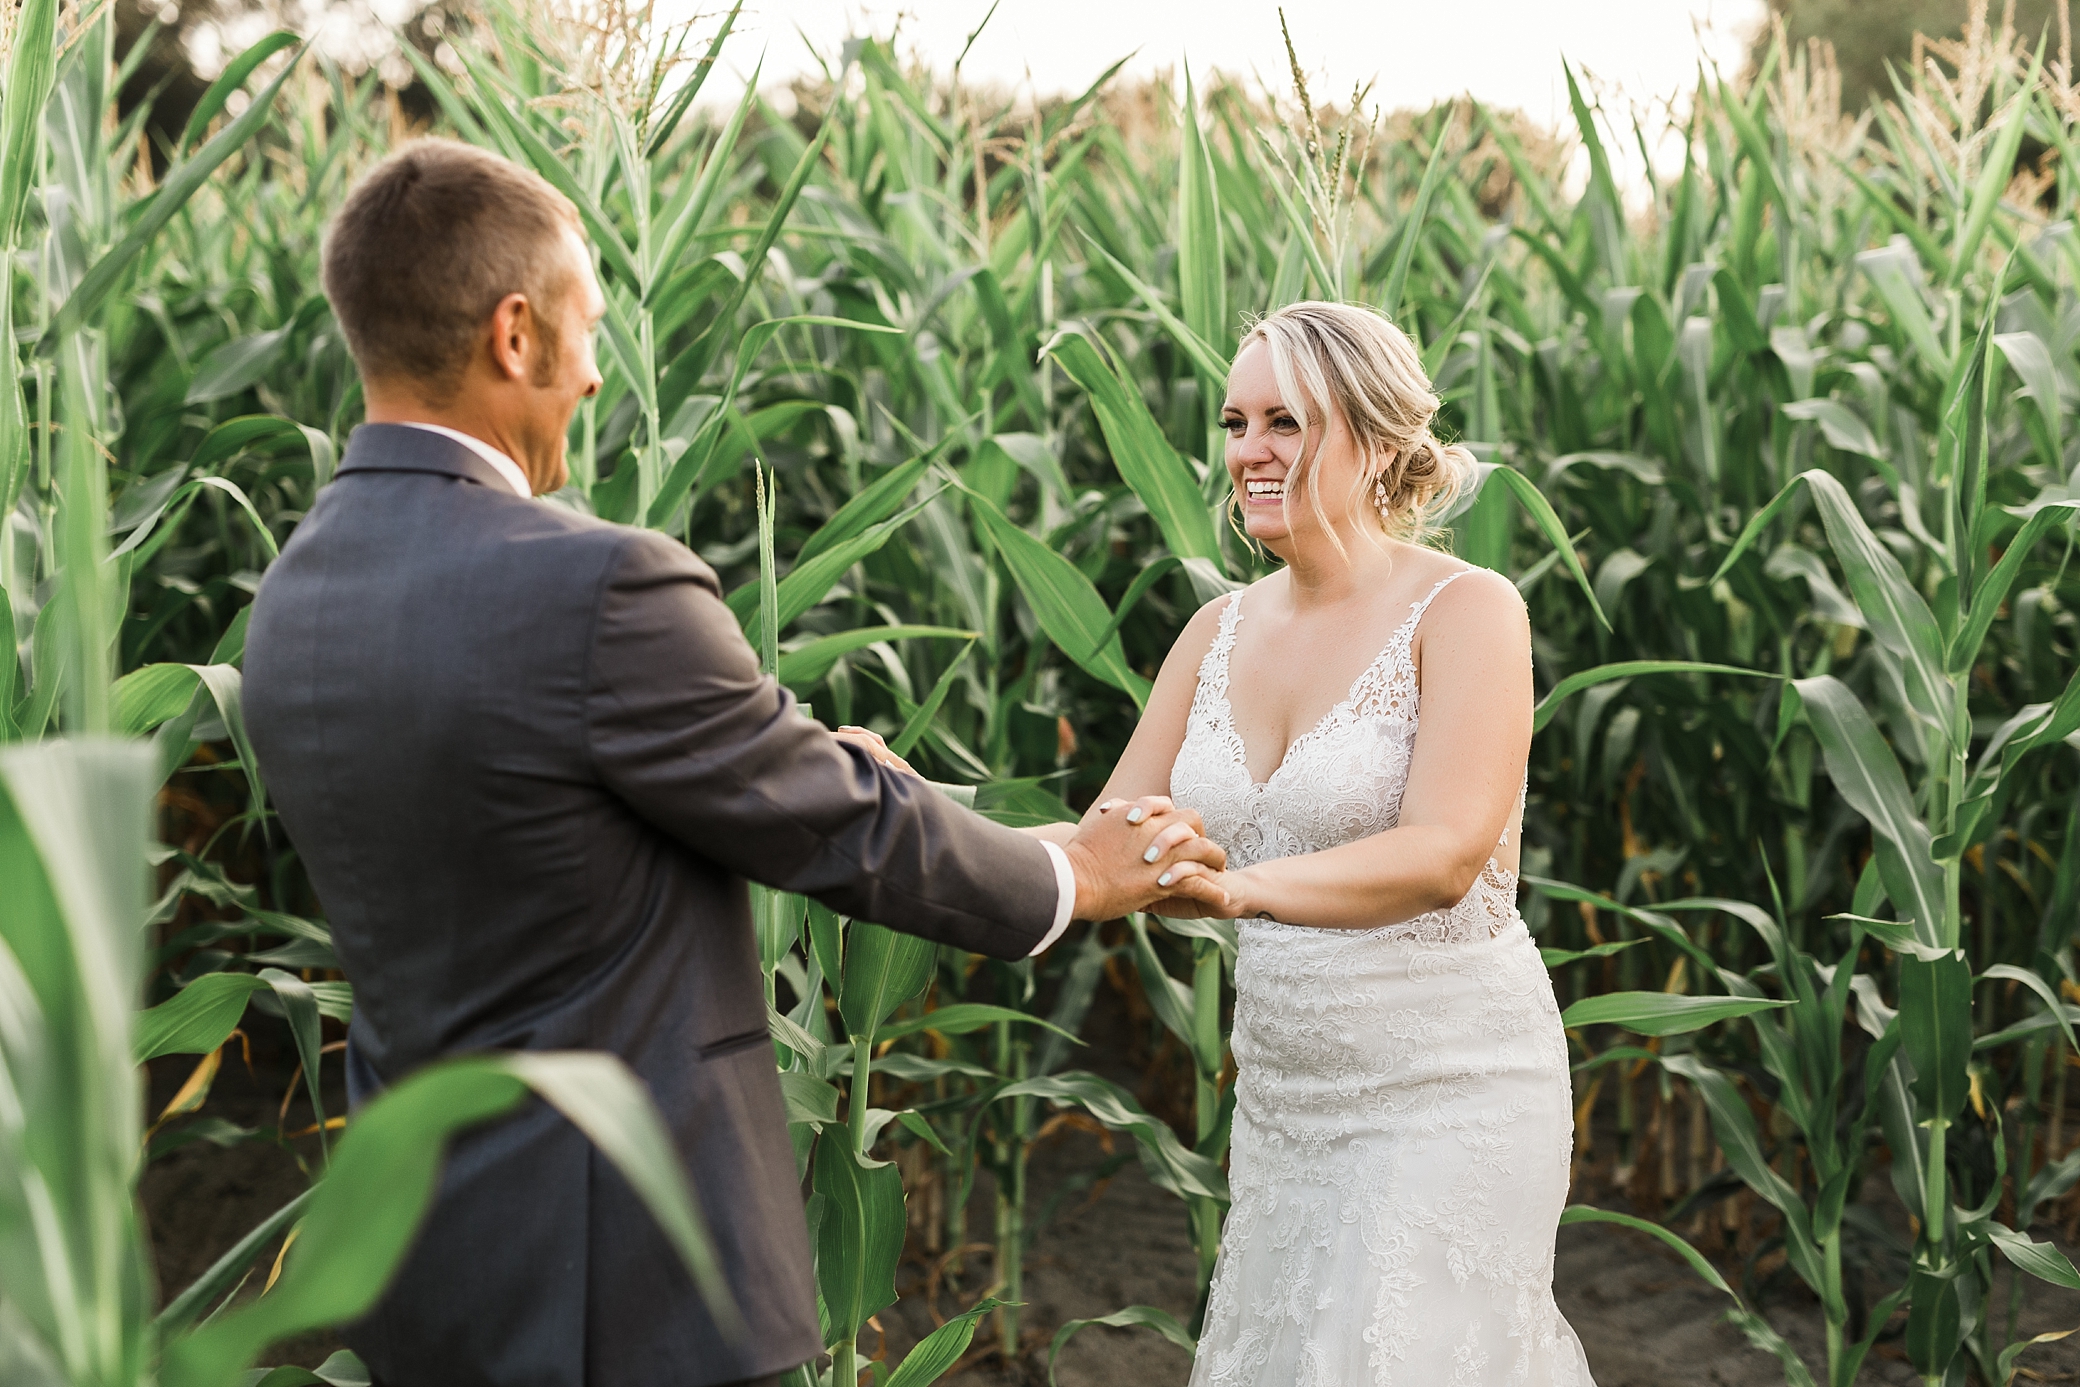 Bride and groom portraits in the cornfields at Mount Vernon's Wedding Venue, Maplehurst Farm. Photographed by Washington Wedding Photographer, Megan Montalvo Photography 